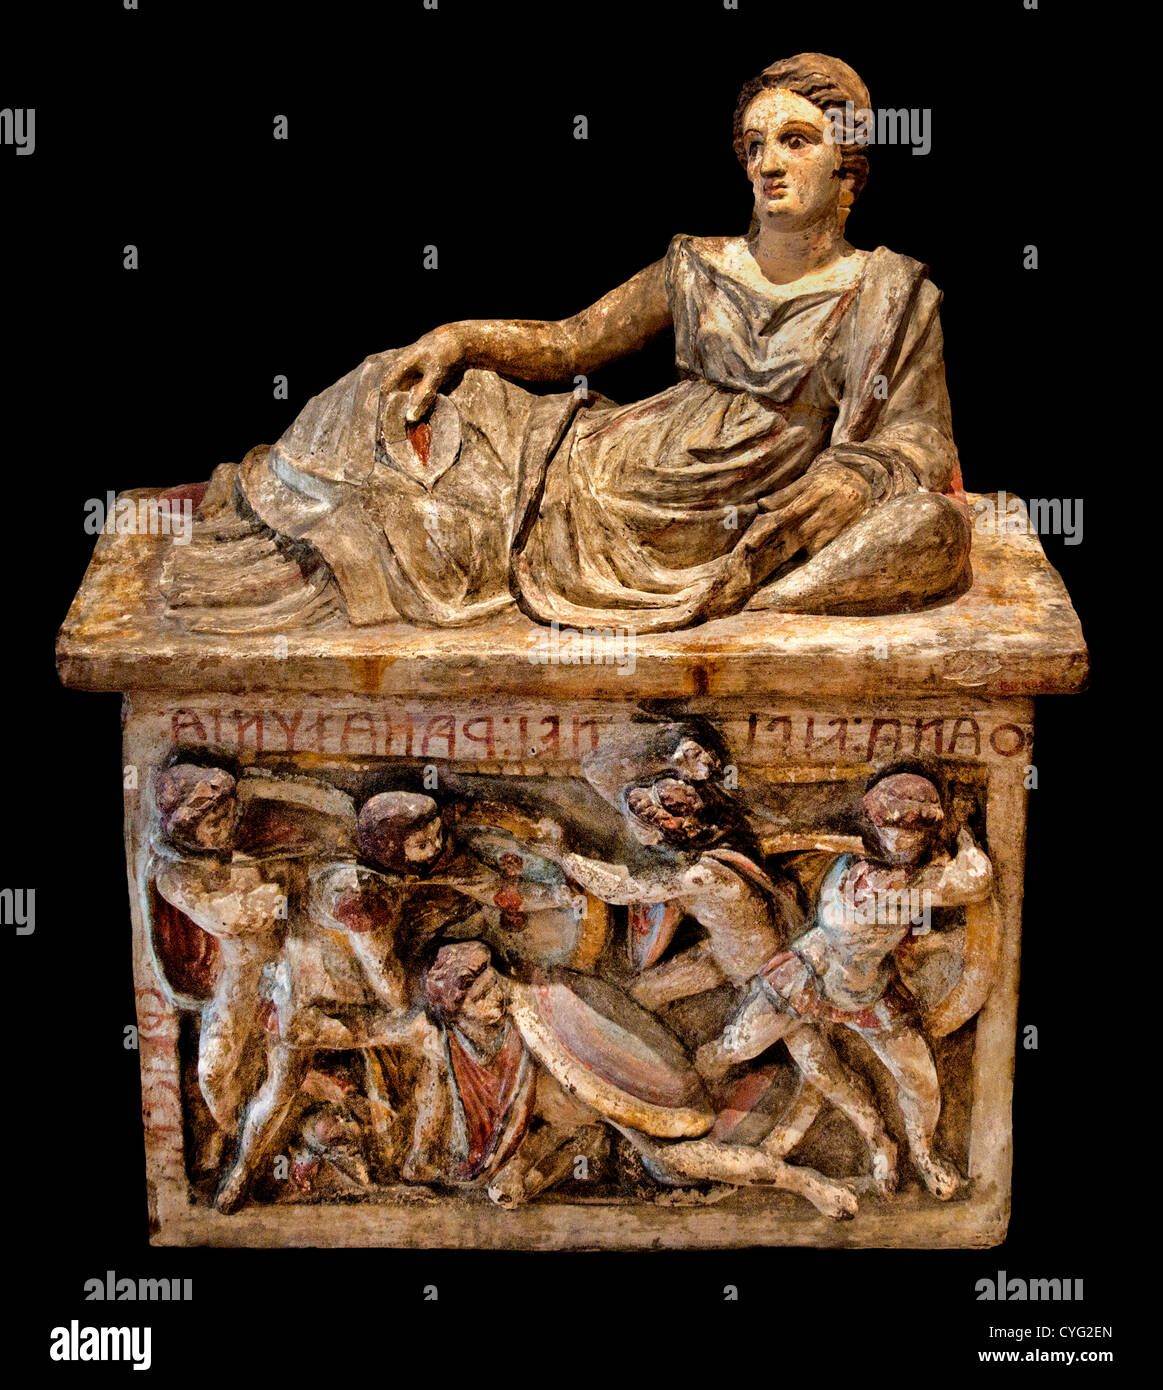 Thana Vipinei Ranazunia, moglie di Terracotta Creice urna cineraria ellenistico del II secolo A.C. Siti Etruschi di 74 x 52 cm Etruria Toscana Foto Stock